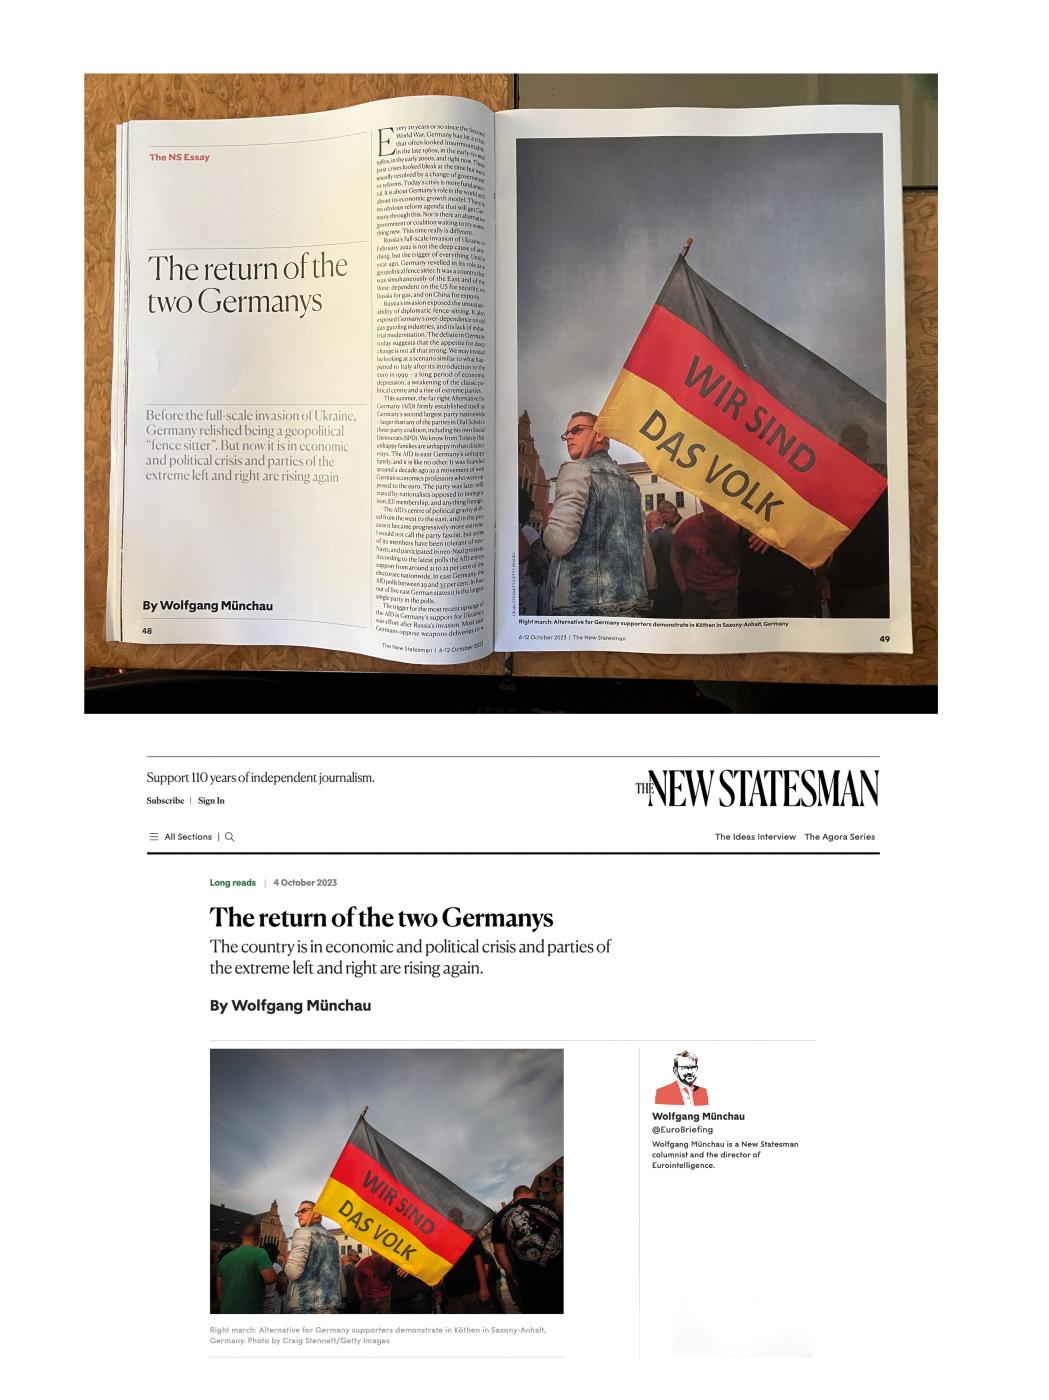  New Statesman (UK) Print and Online versions 